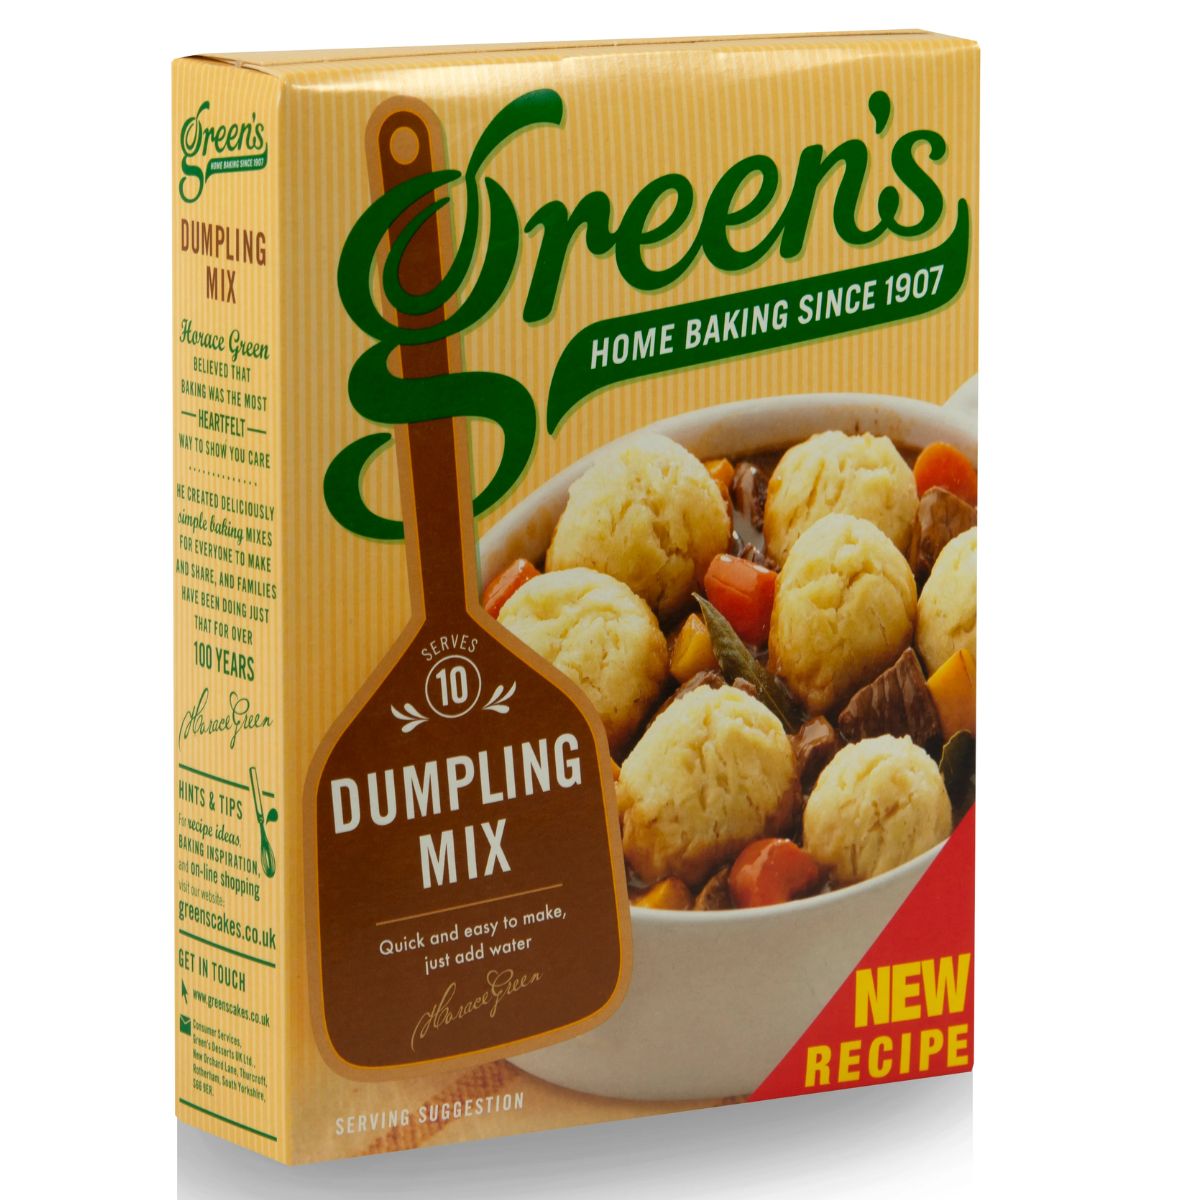 Green's Classic Dumpling Mix - 137g home baking spice dumpling mix.